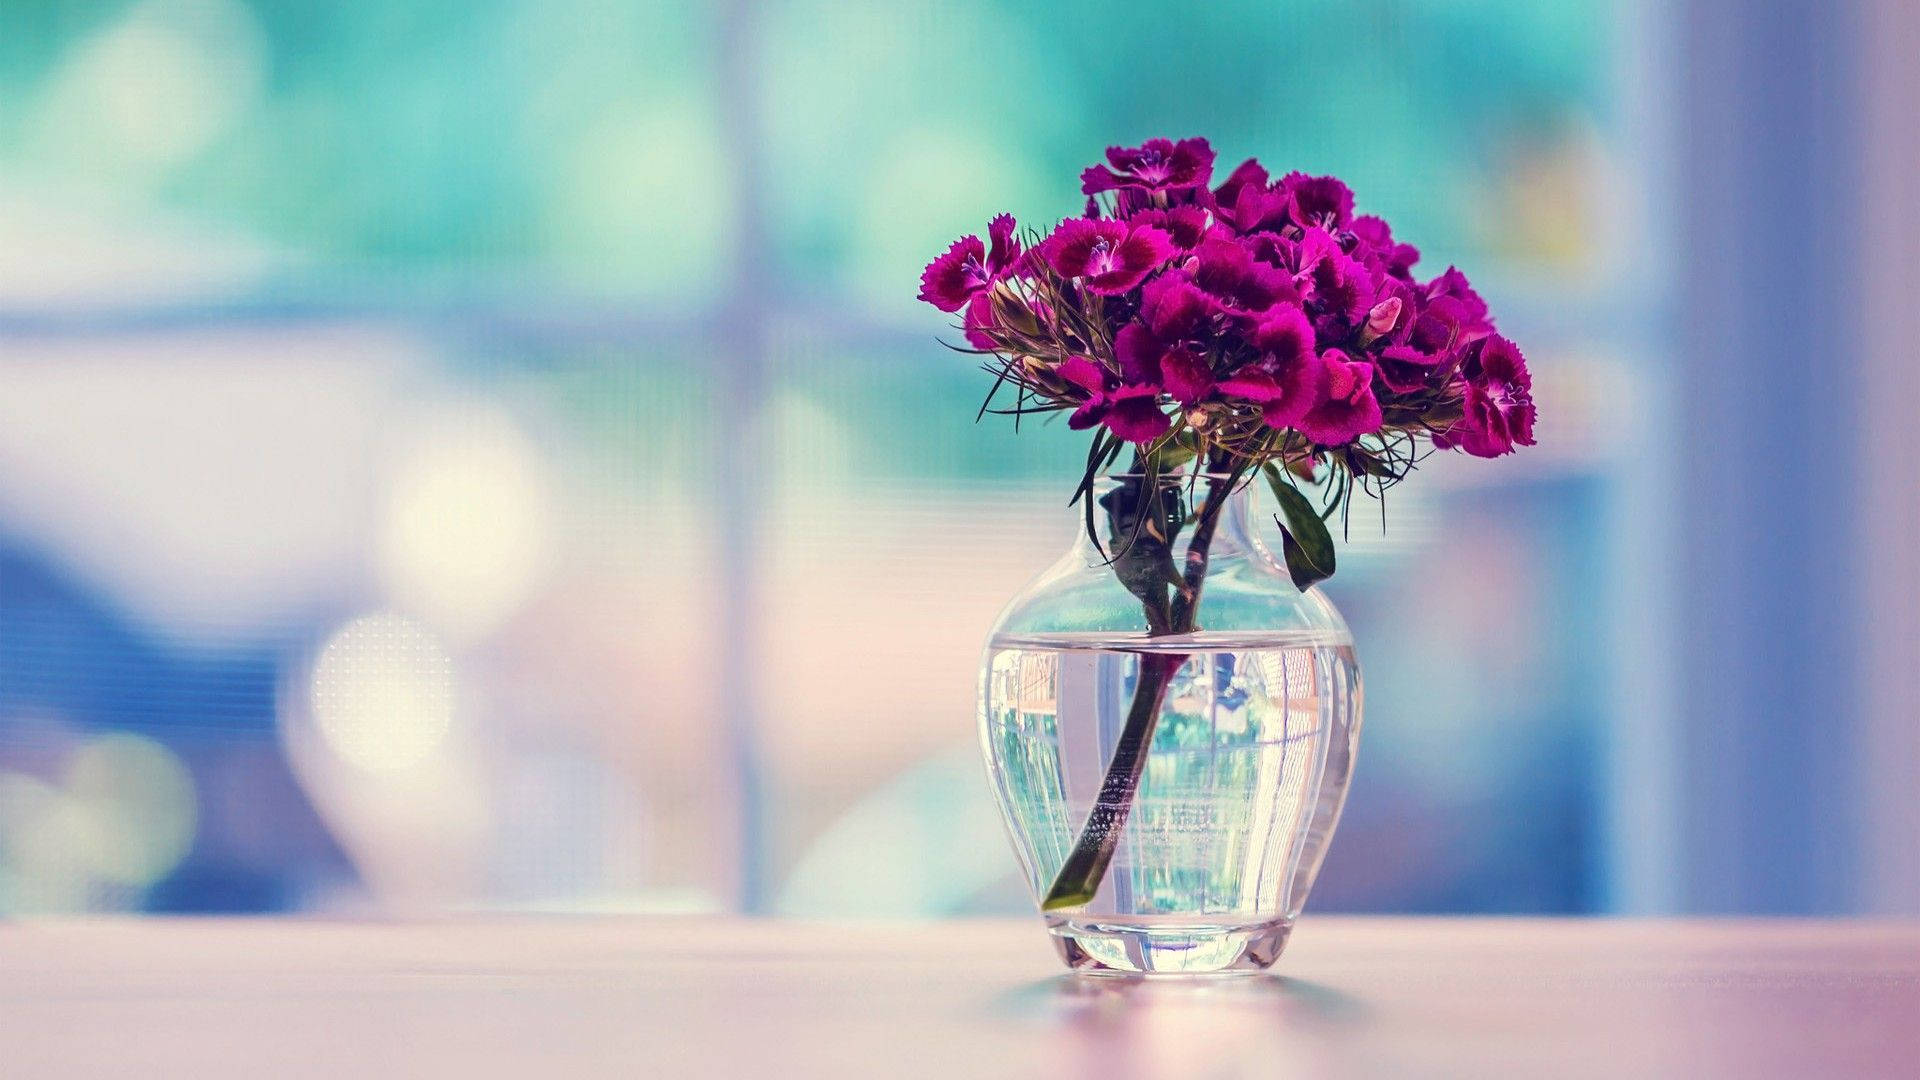 Beautiful Hd Flowers In A Vase